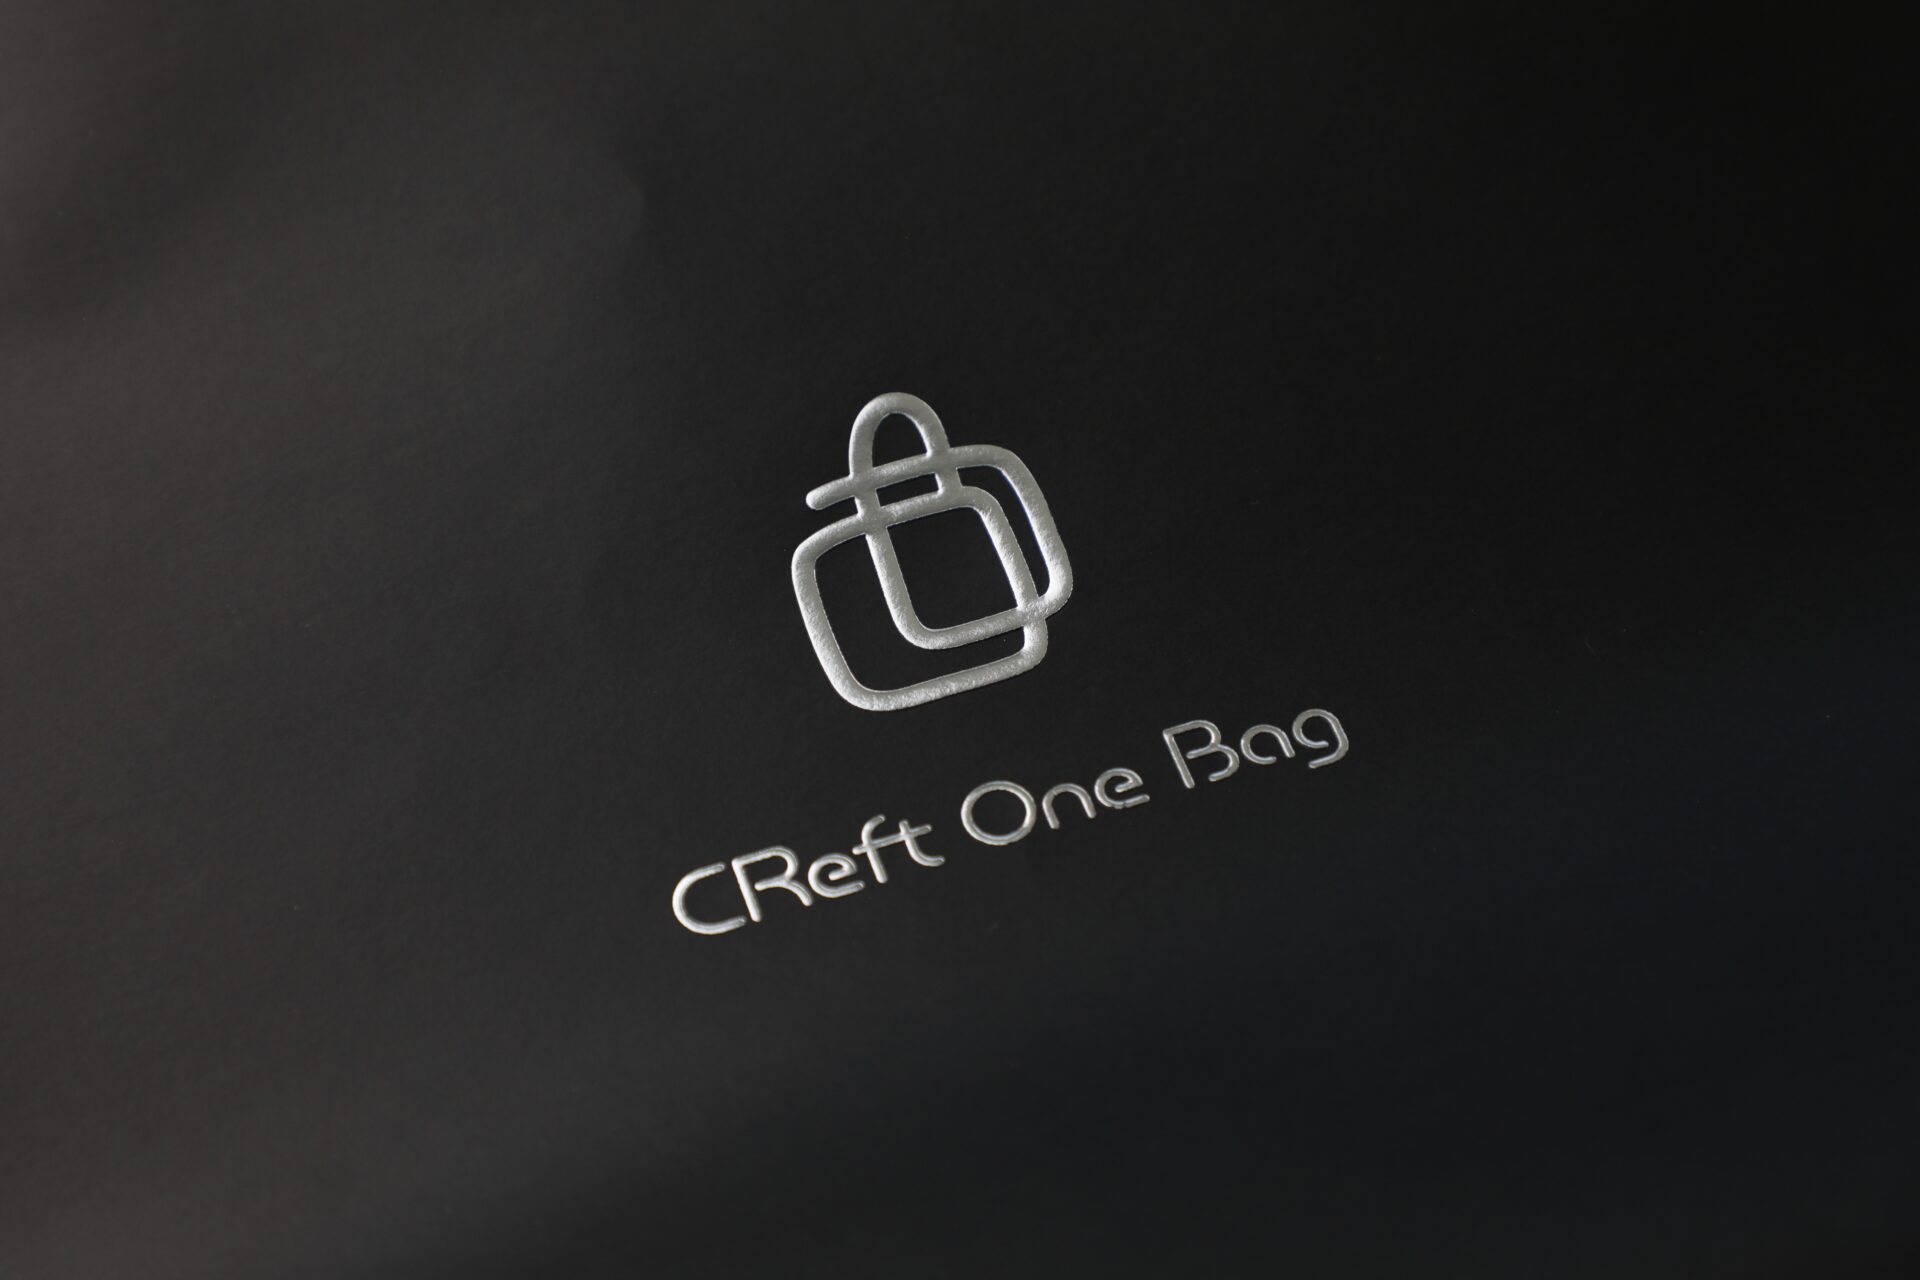 CReft One Bag